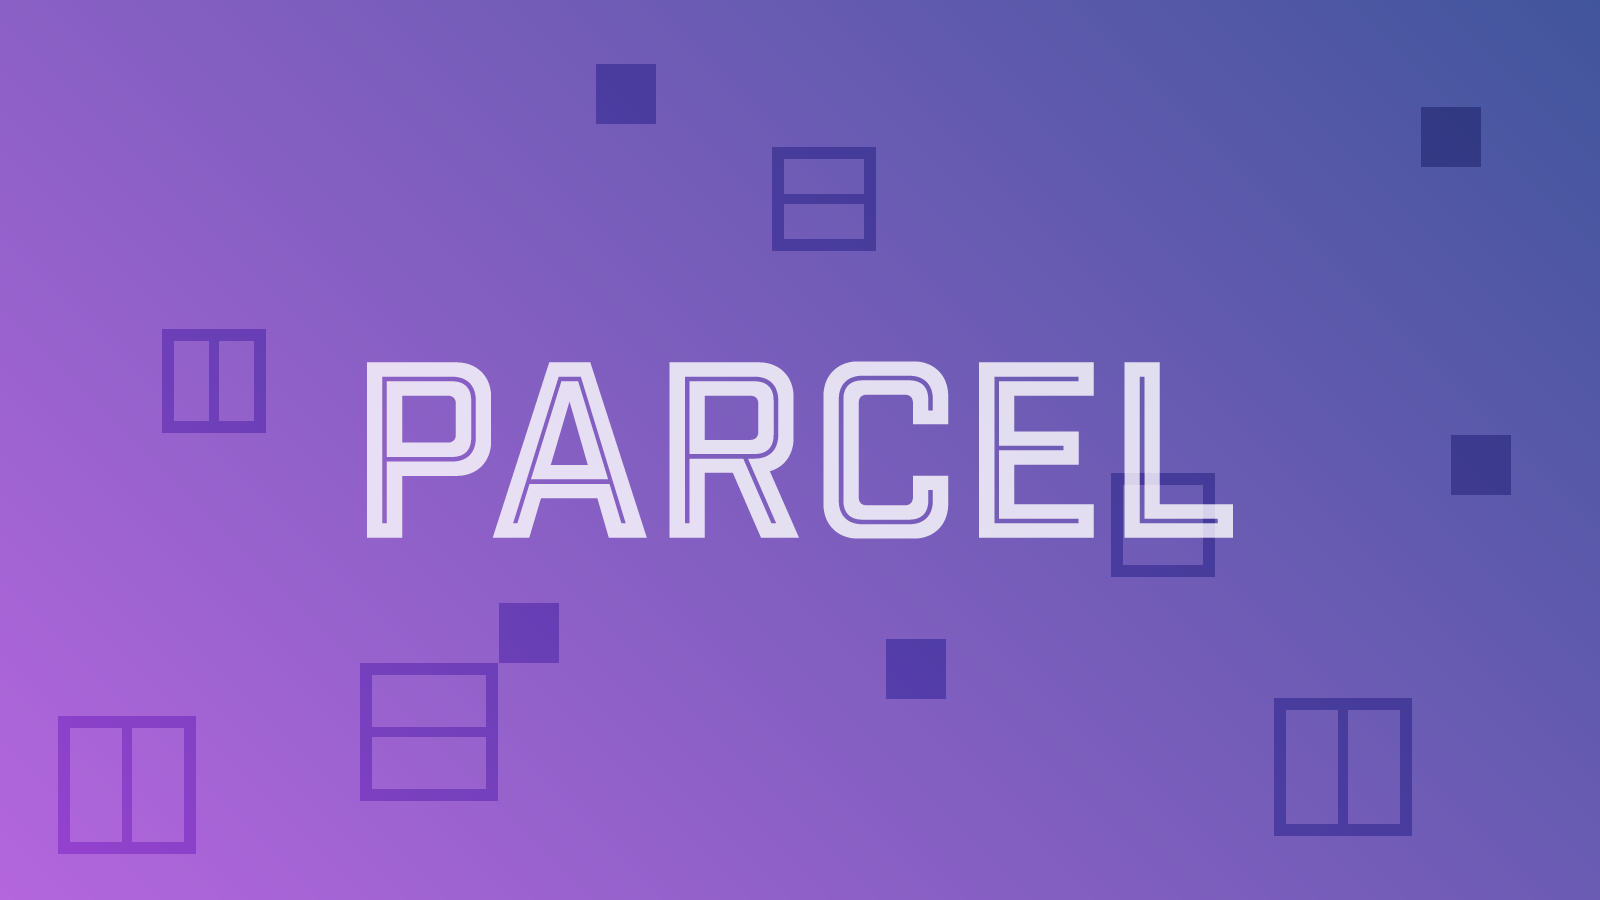 Parcel logo on a purple gradient background